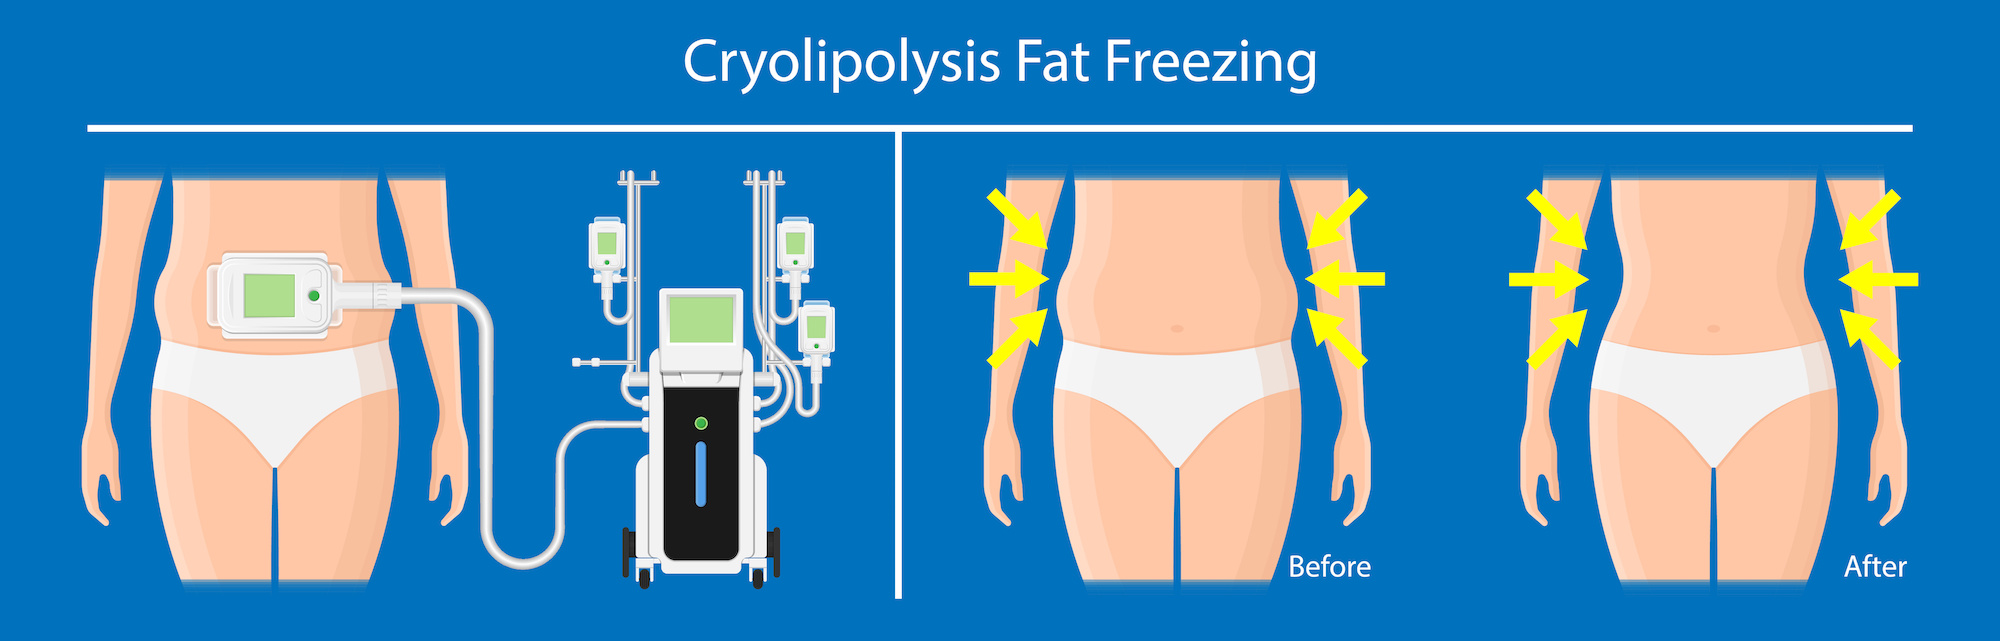 cryolipolysis fat freezing